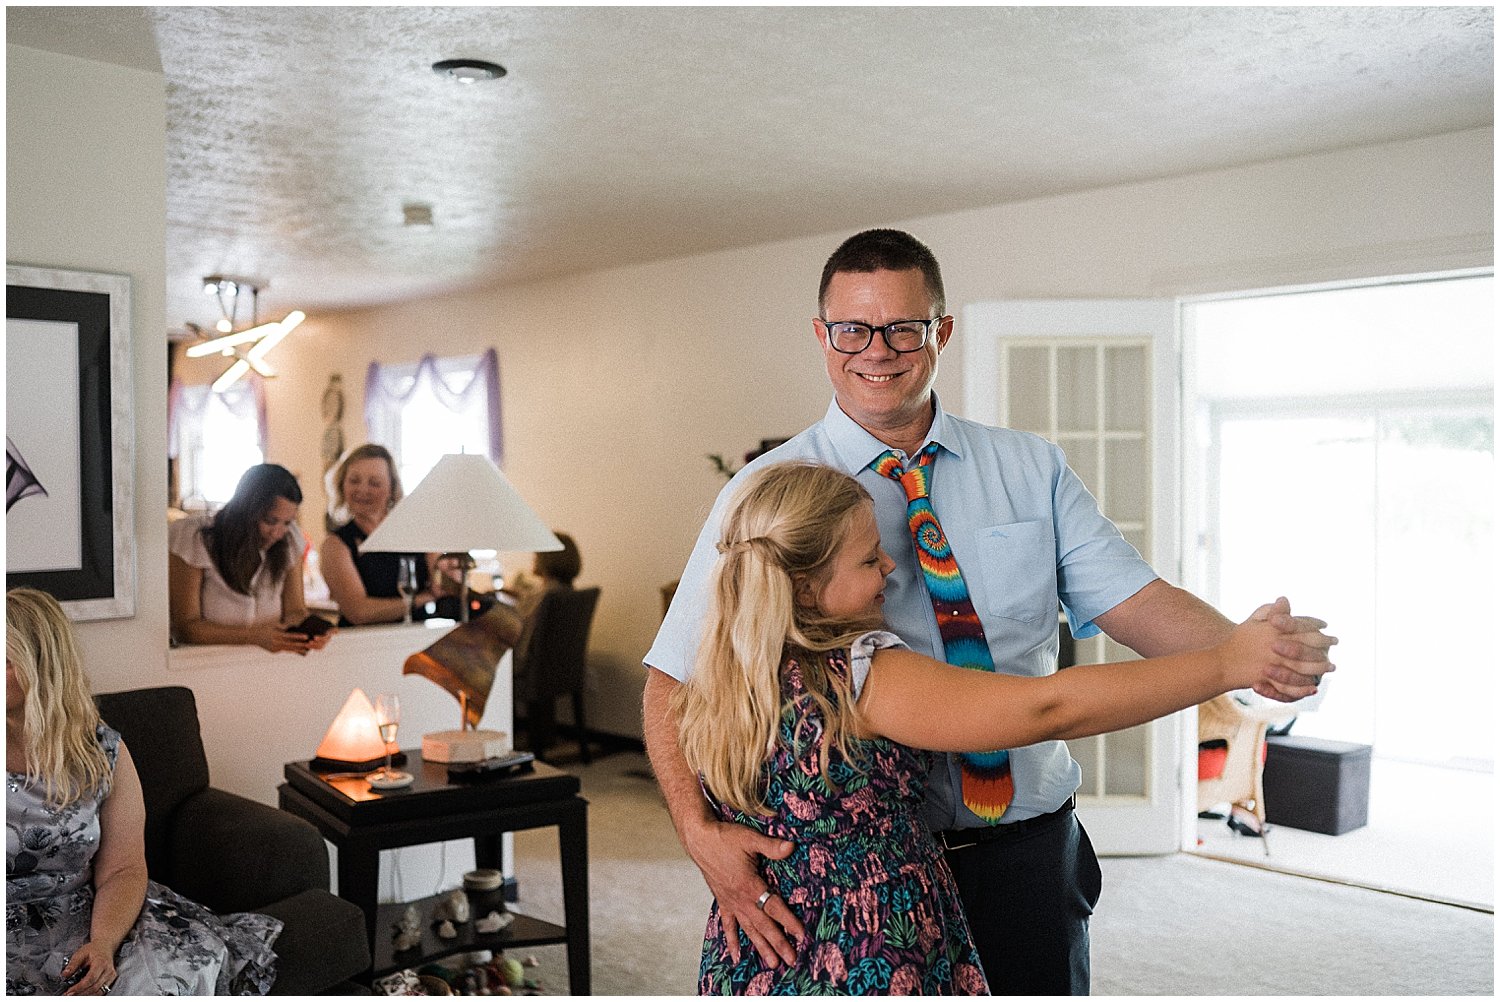 In-Home Wedding Reception Celebration | Dayton, OH